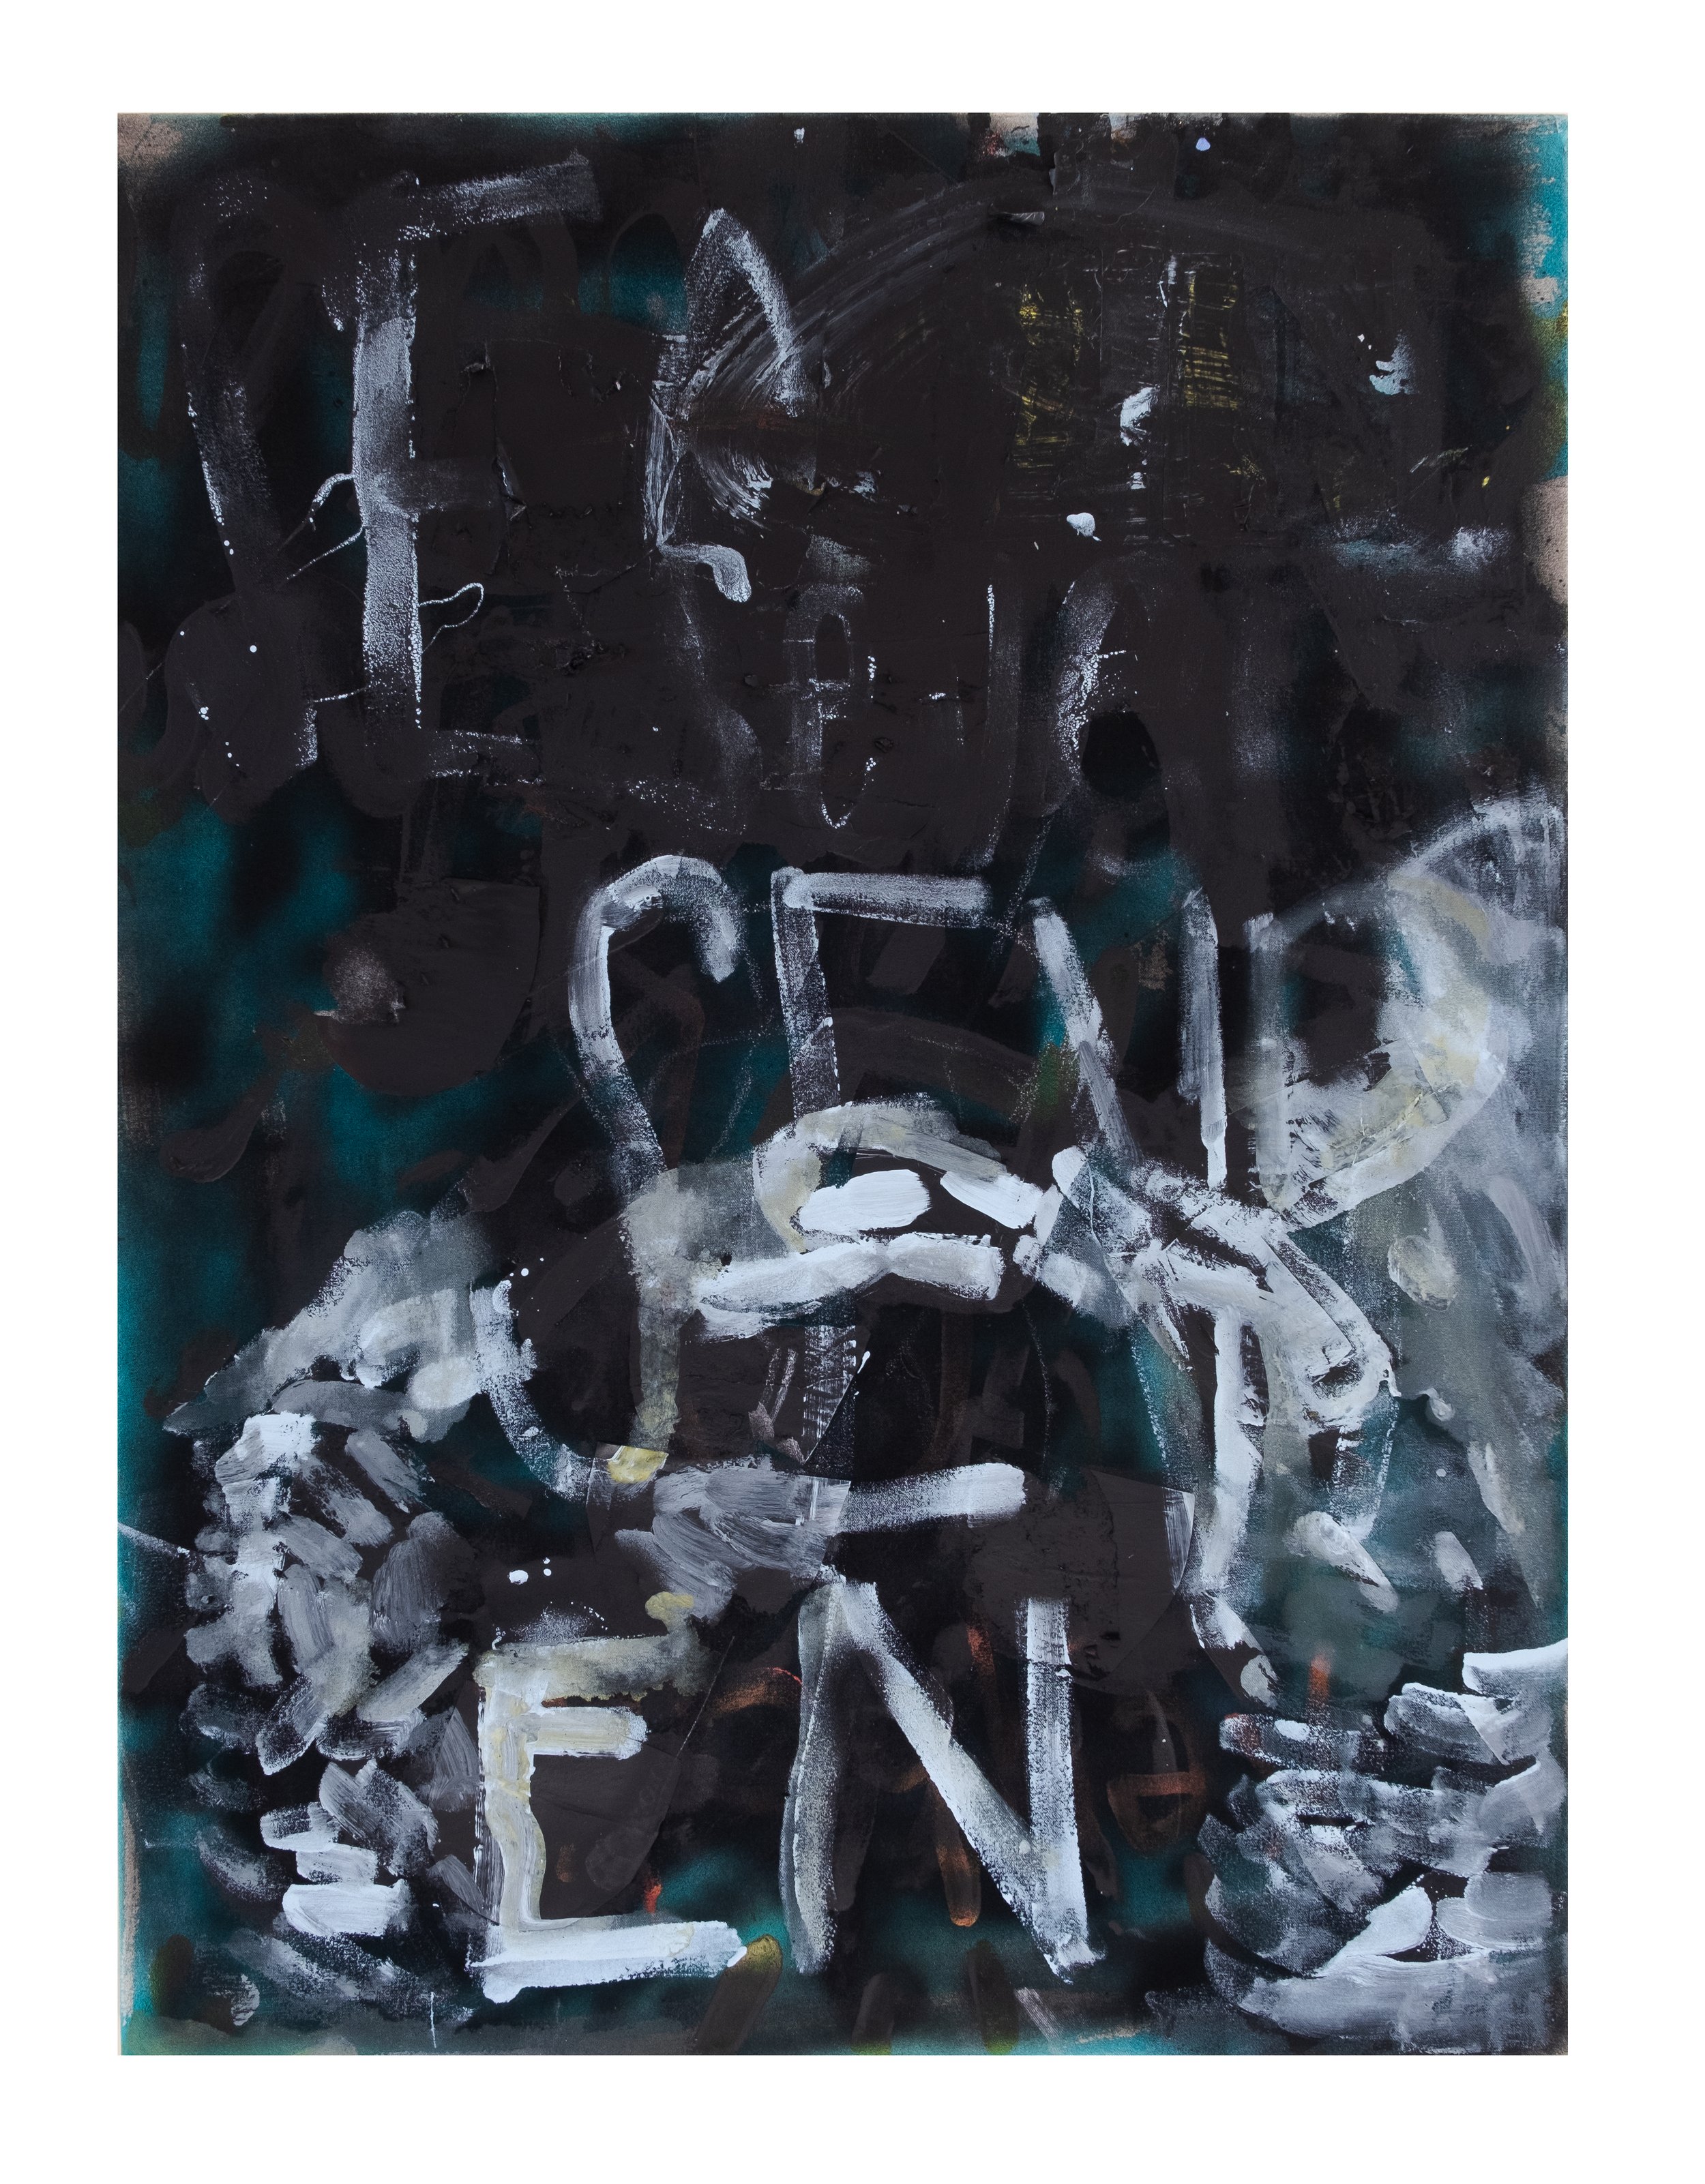  Severen Severen, speak so slightly, 40 x 30 inches, acrylic and latex on canvas, 2021 